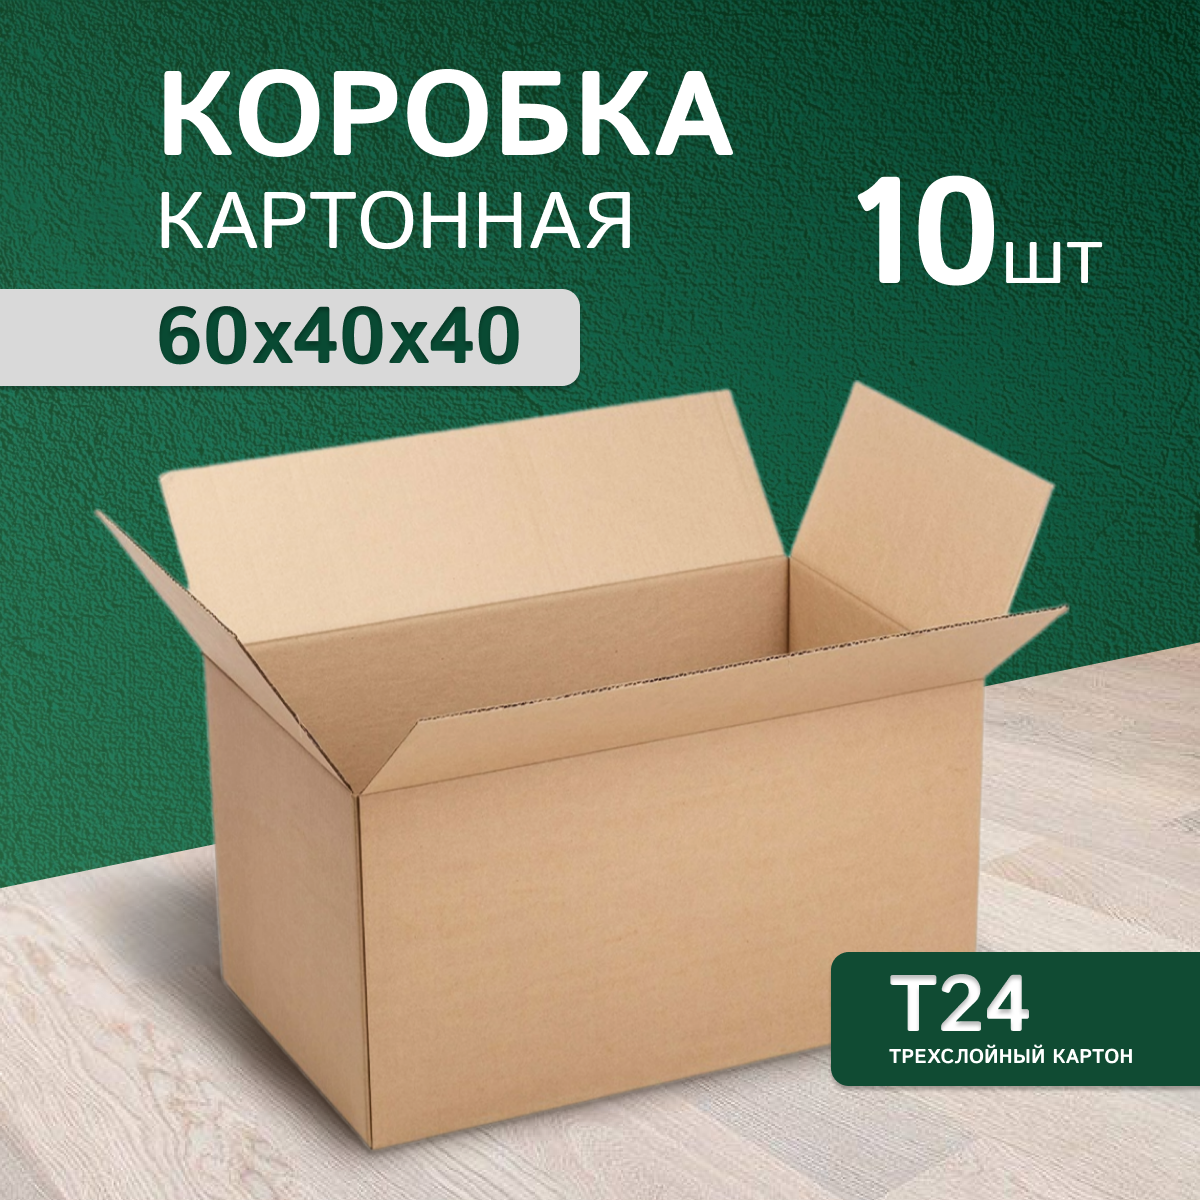 Коробки для хранения и переезда , 10 штук, размер 60x40x40 см, Т24